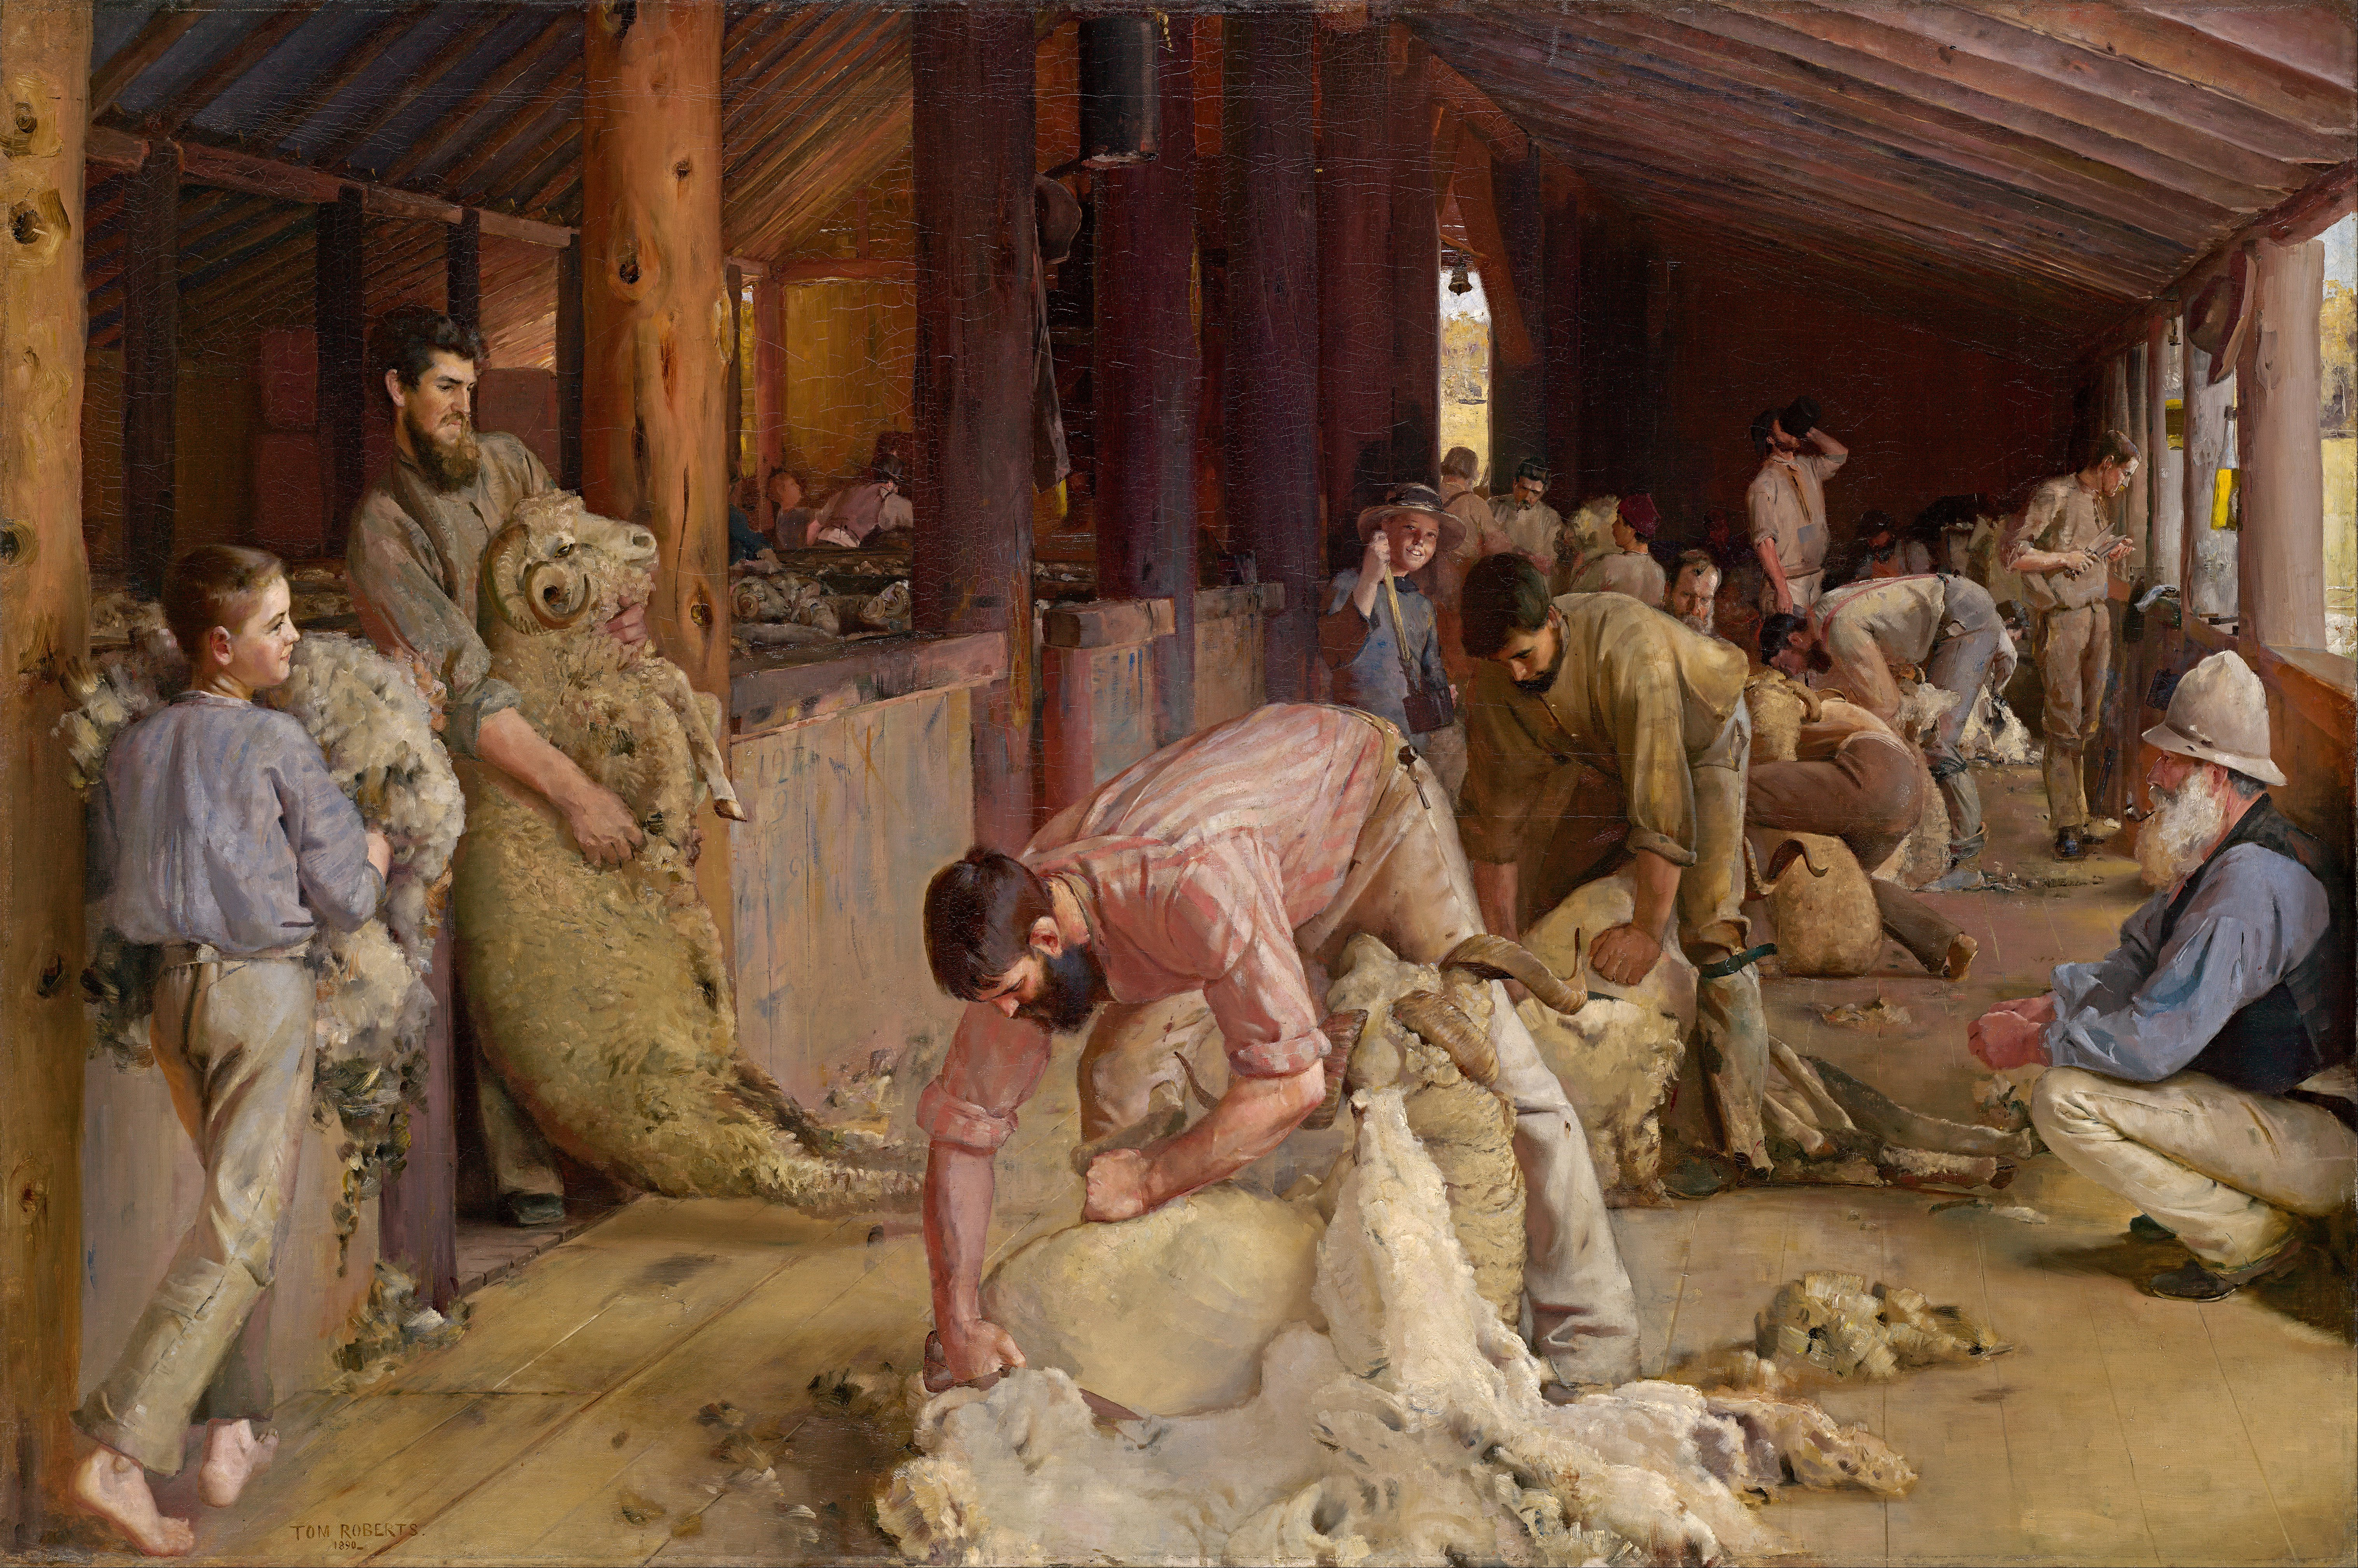 Shearing the Rams - Wikipedia